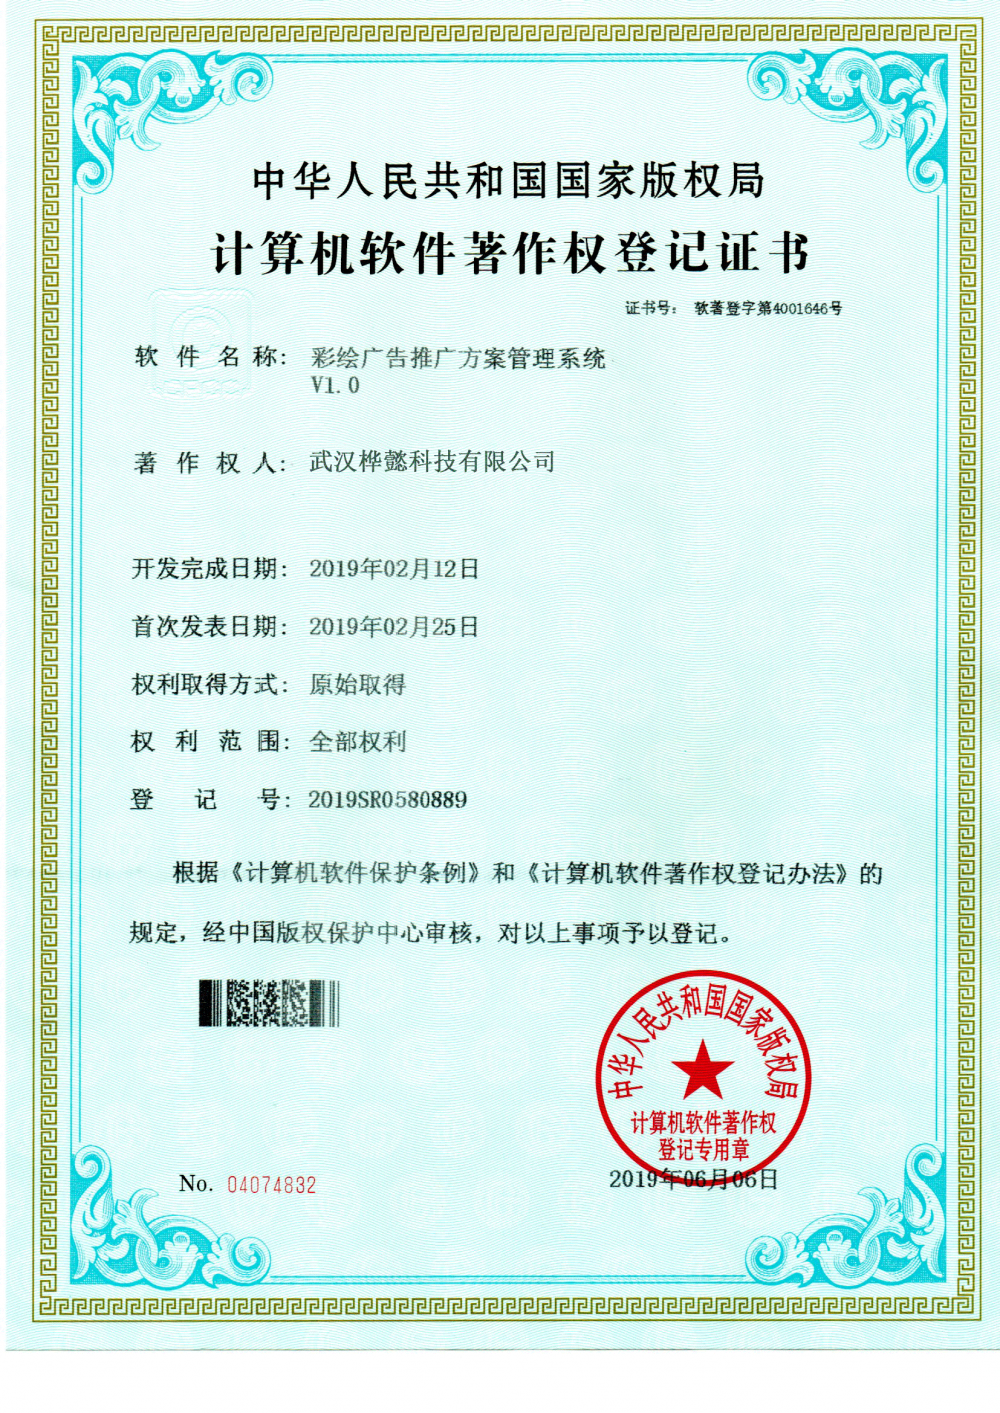 Copyright Registration Certificate of painting Promotion Program Management System